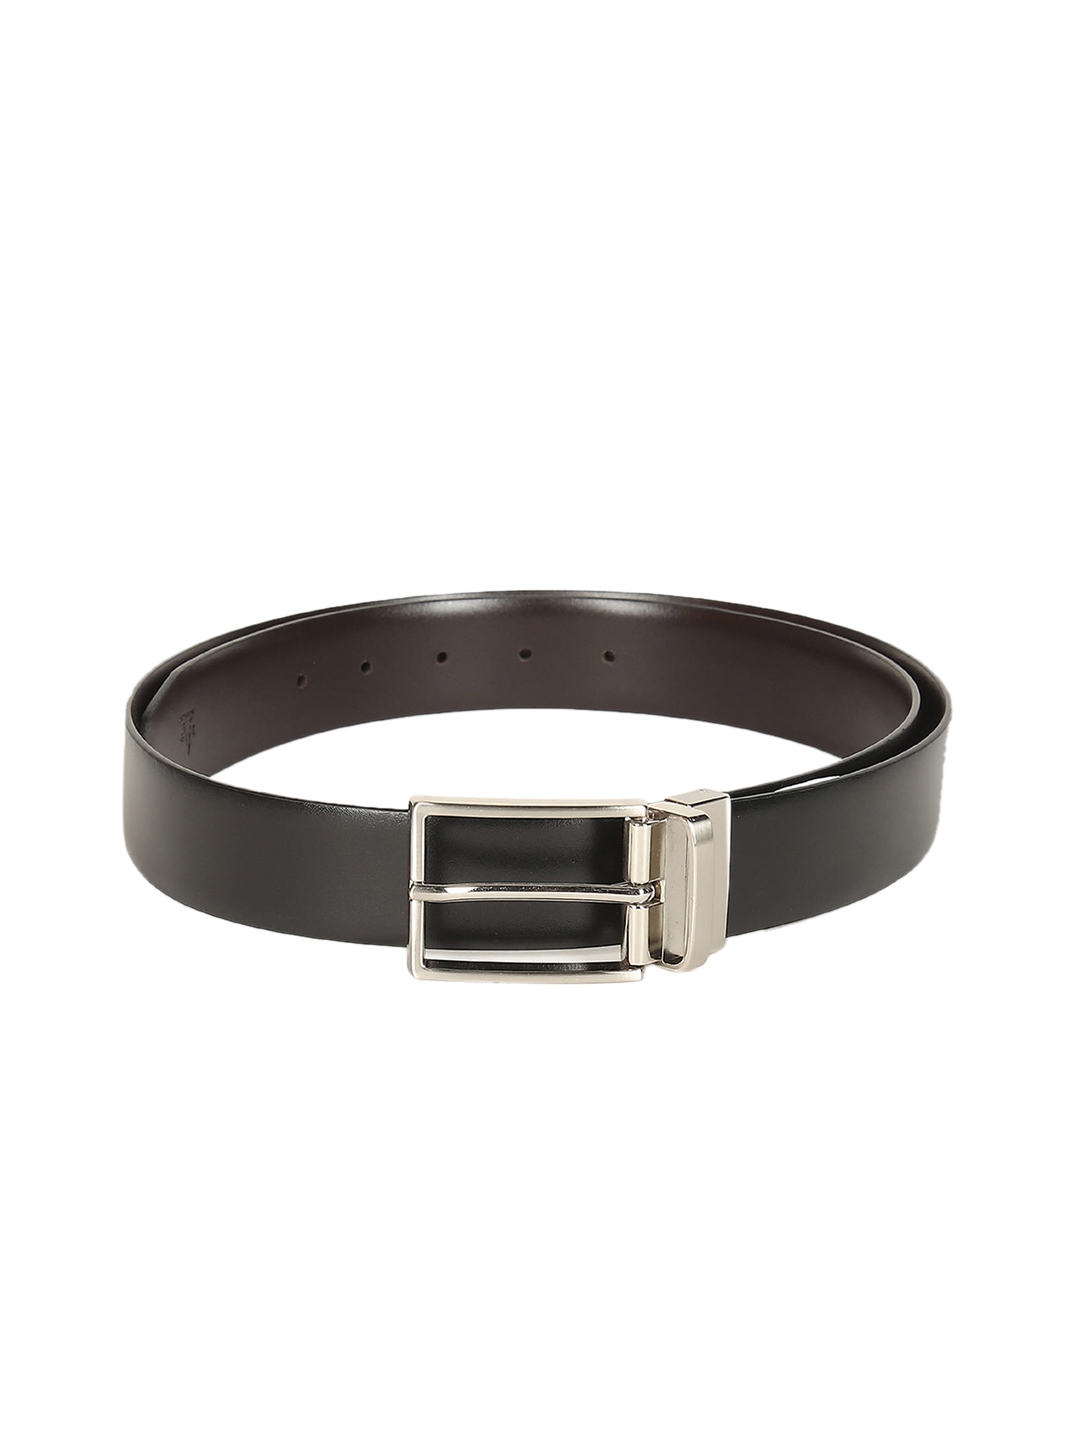 Buy Arrow Men Black Leather Formal Belt - Belts for Men 18673980 | Myntra